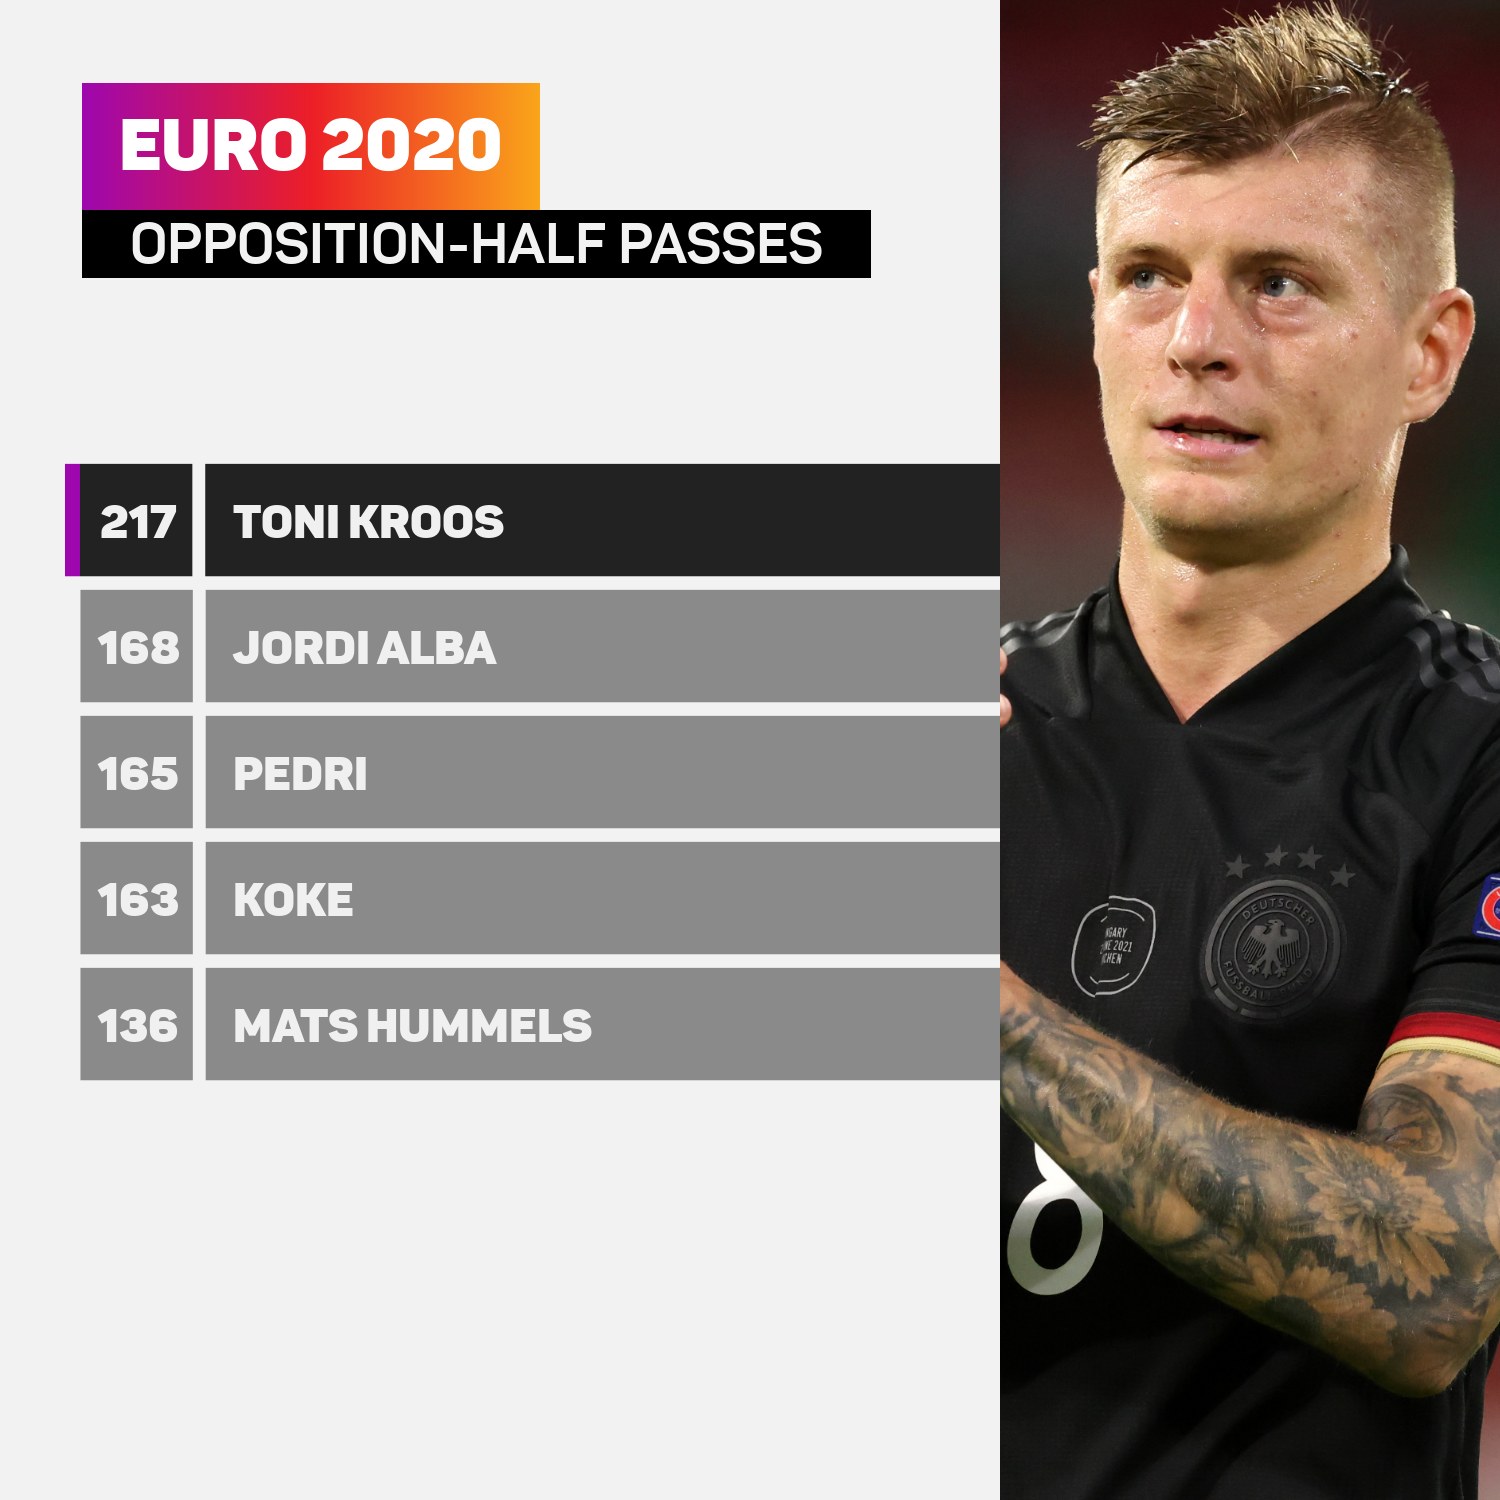 Euro 2020 opposition-half passes